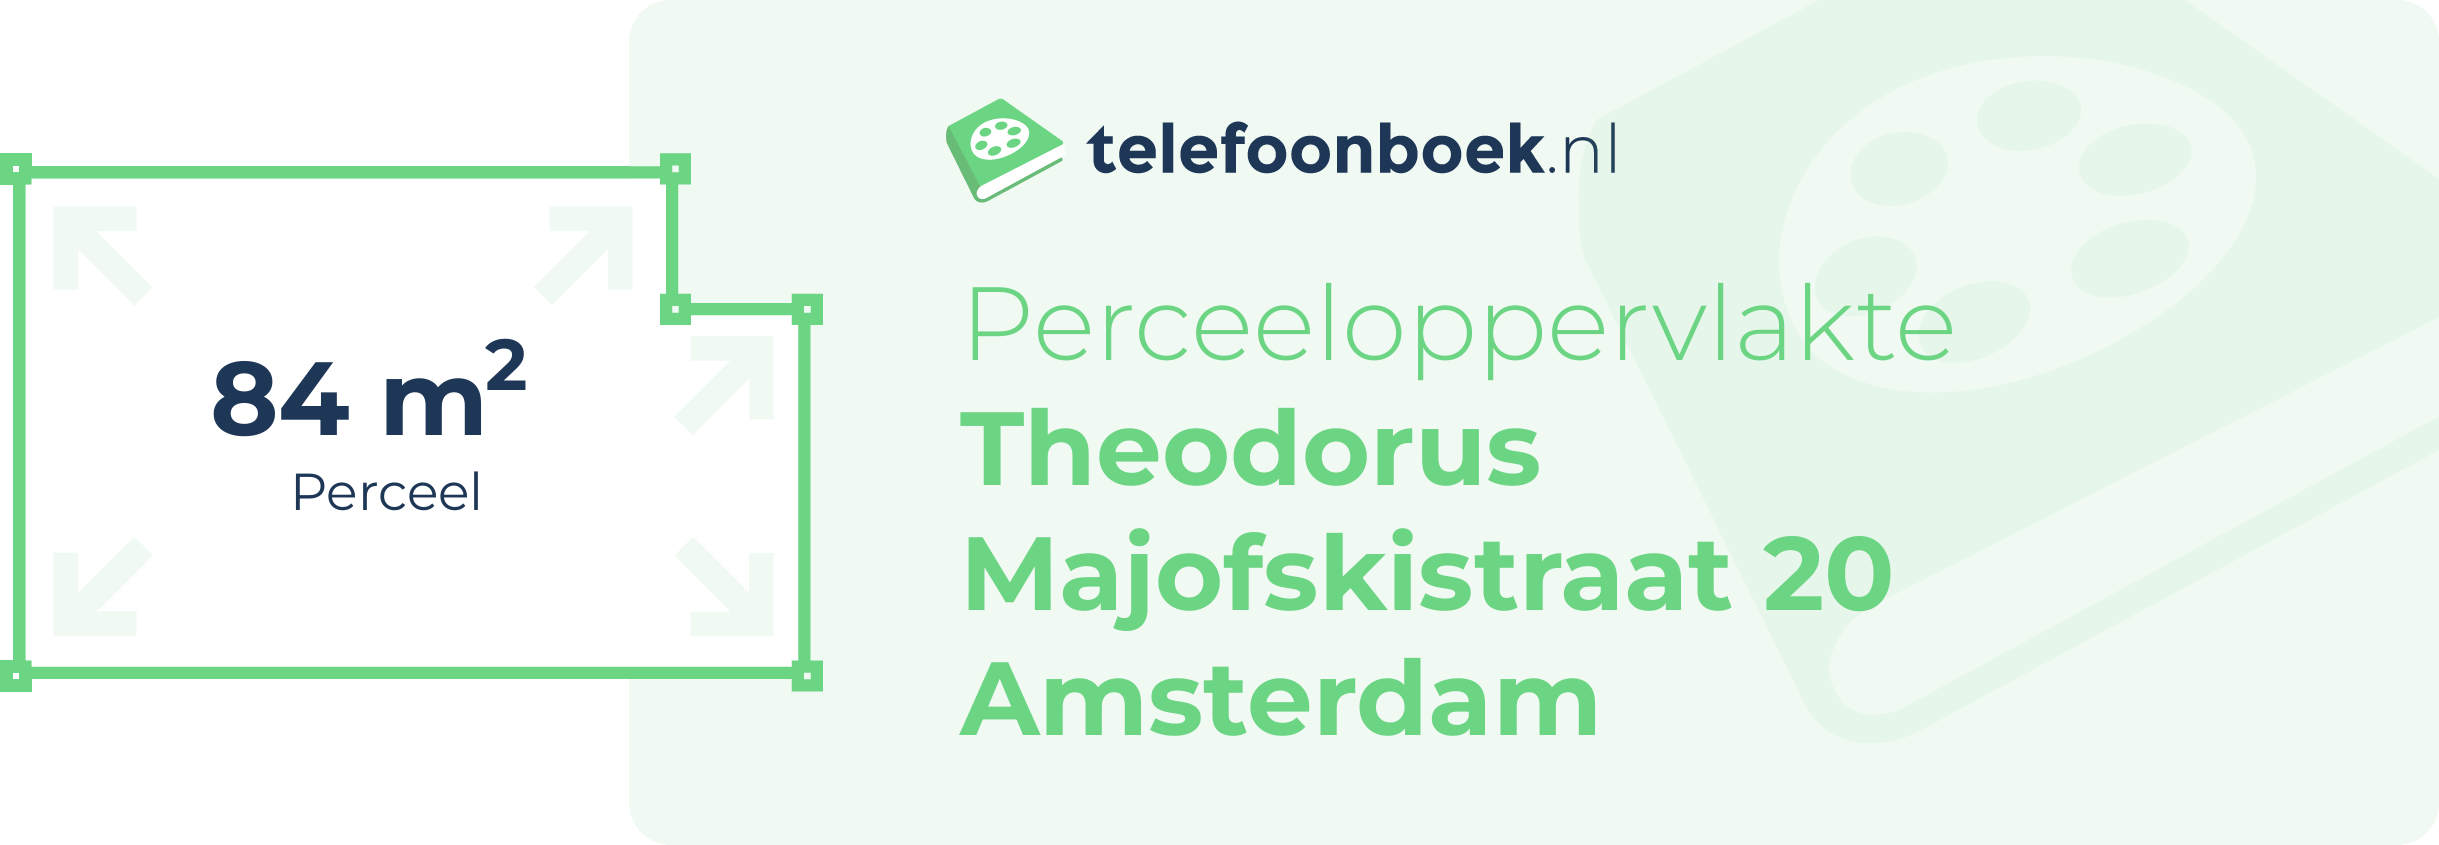 Perceeloppervlakte Theodorus Majofskistraat 20 Amsterdam